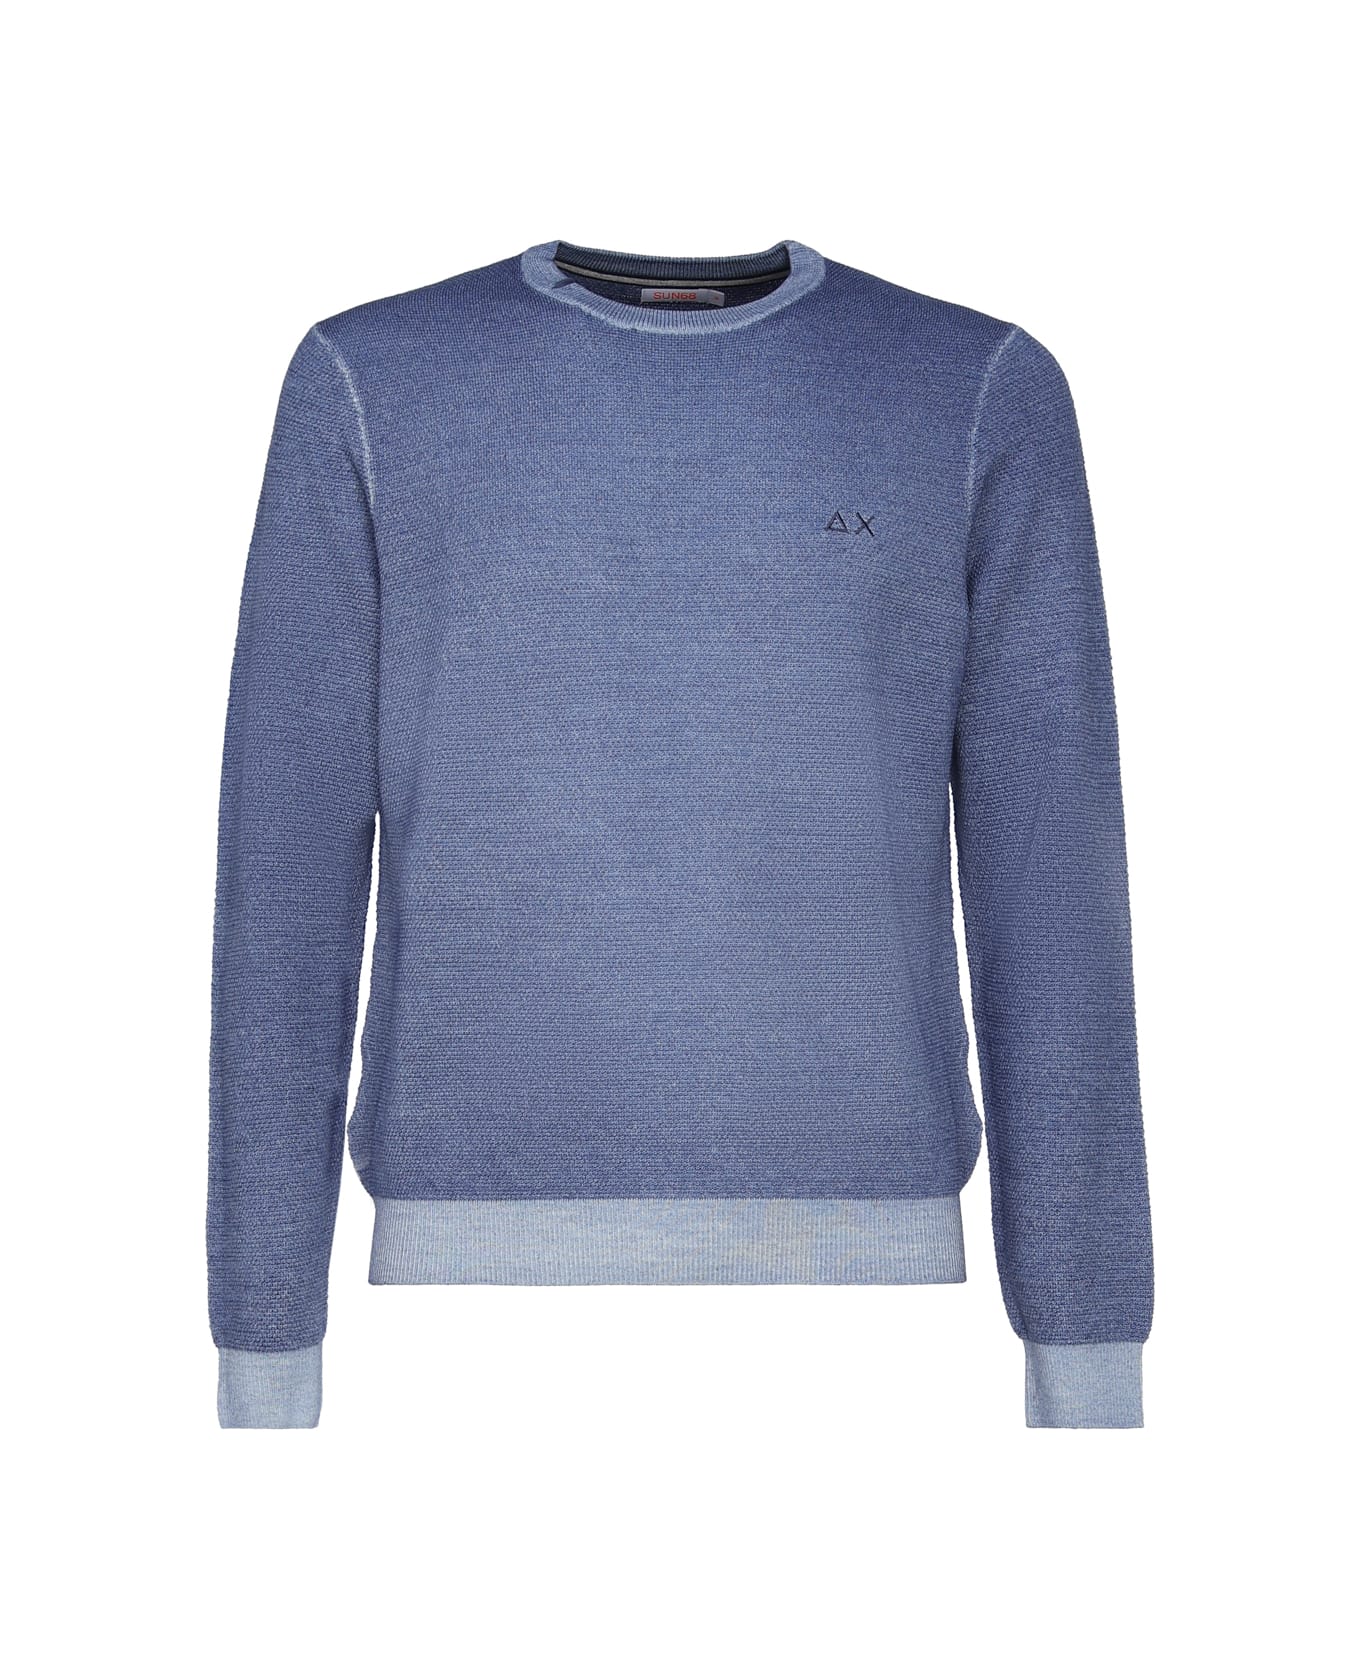 Sun 68 Vintage Round Sweater - Light blue